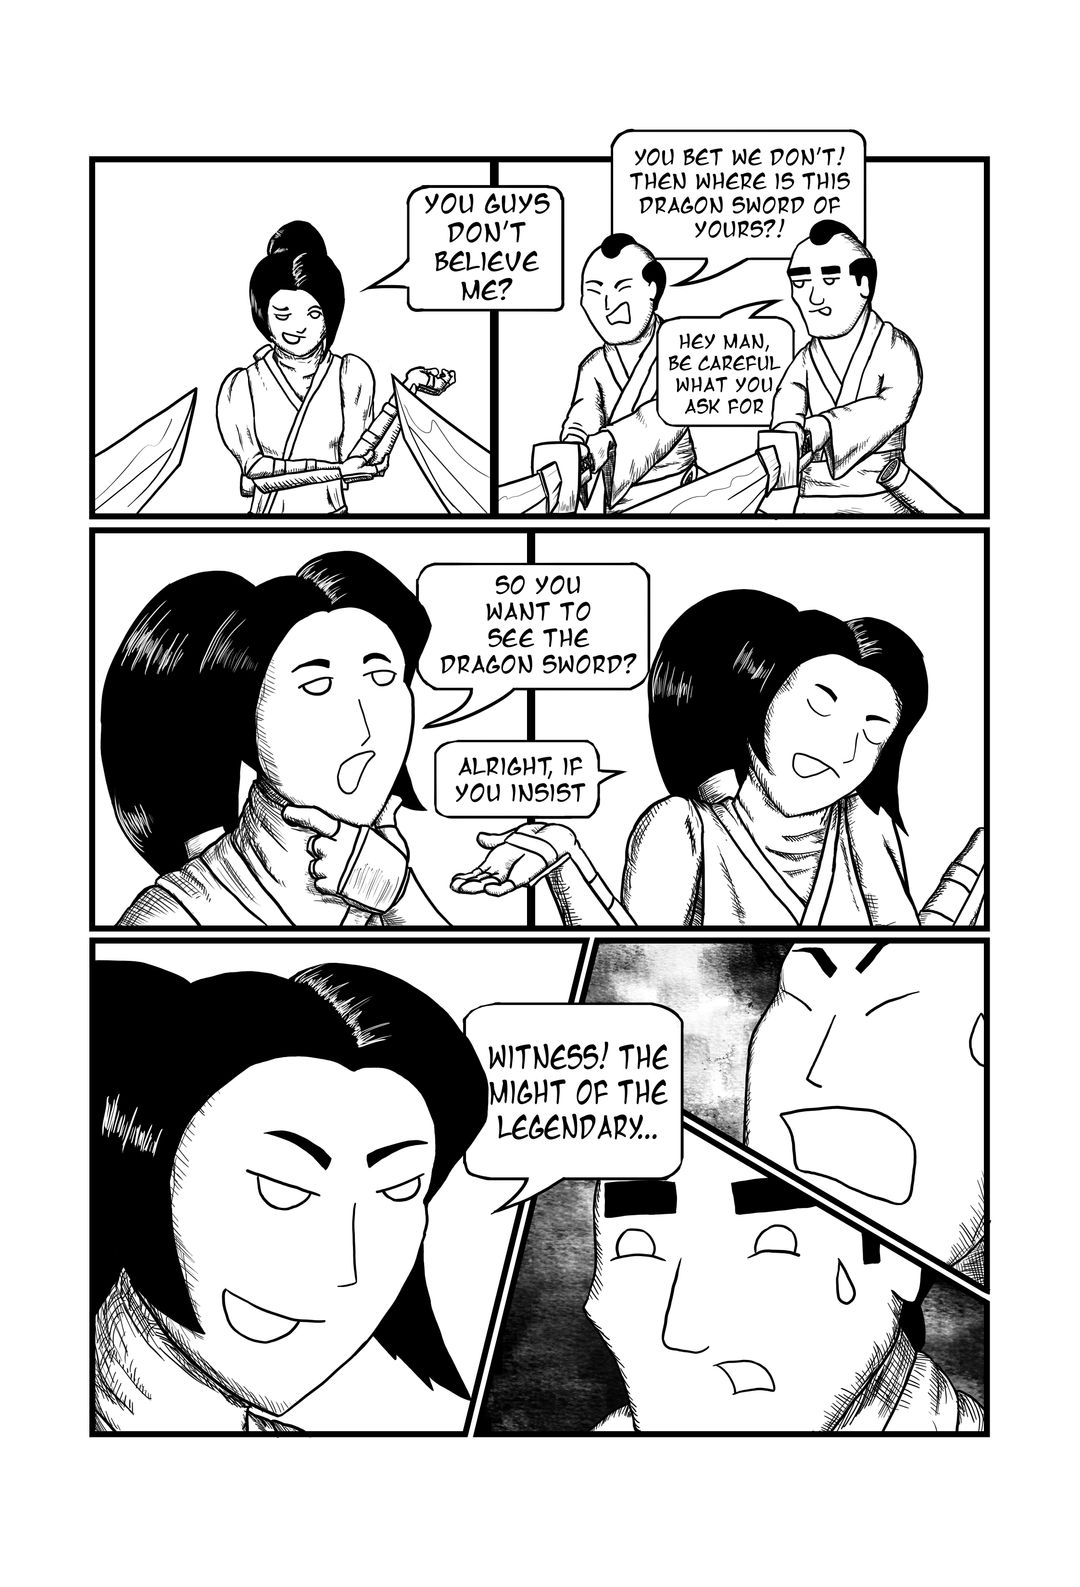 Shotgun Samurai 08 panel 5